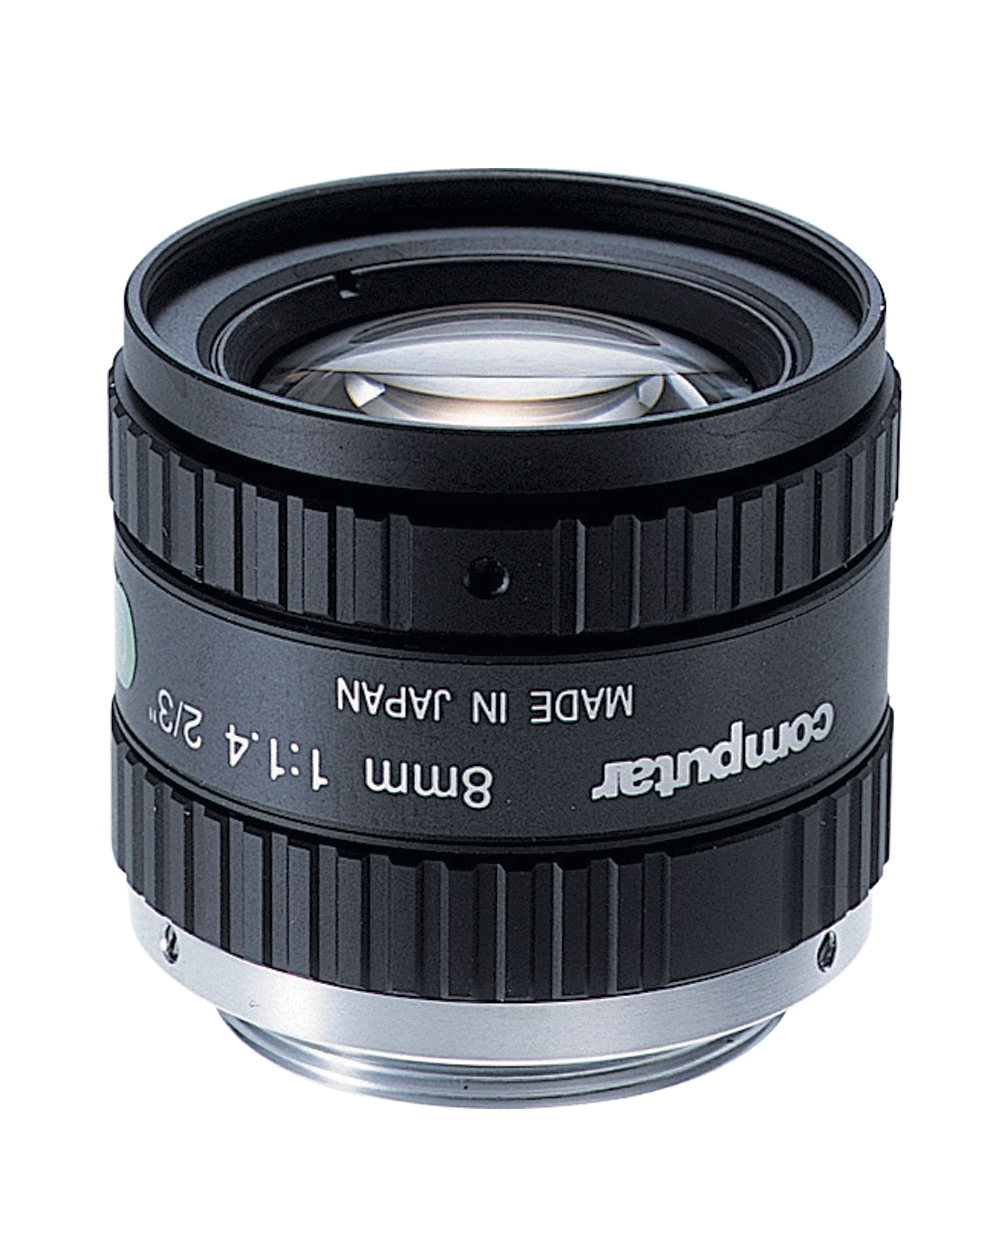 Computar 8 mm f/1.4 Prime Lens